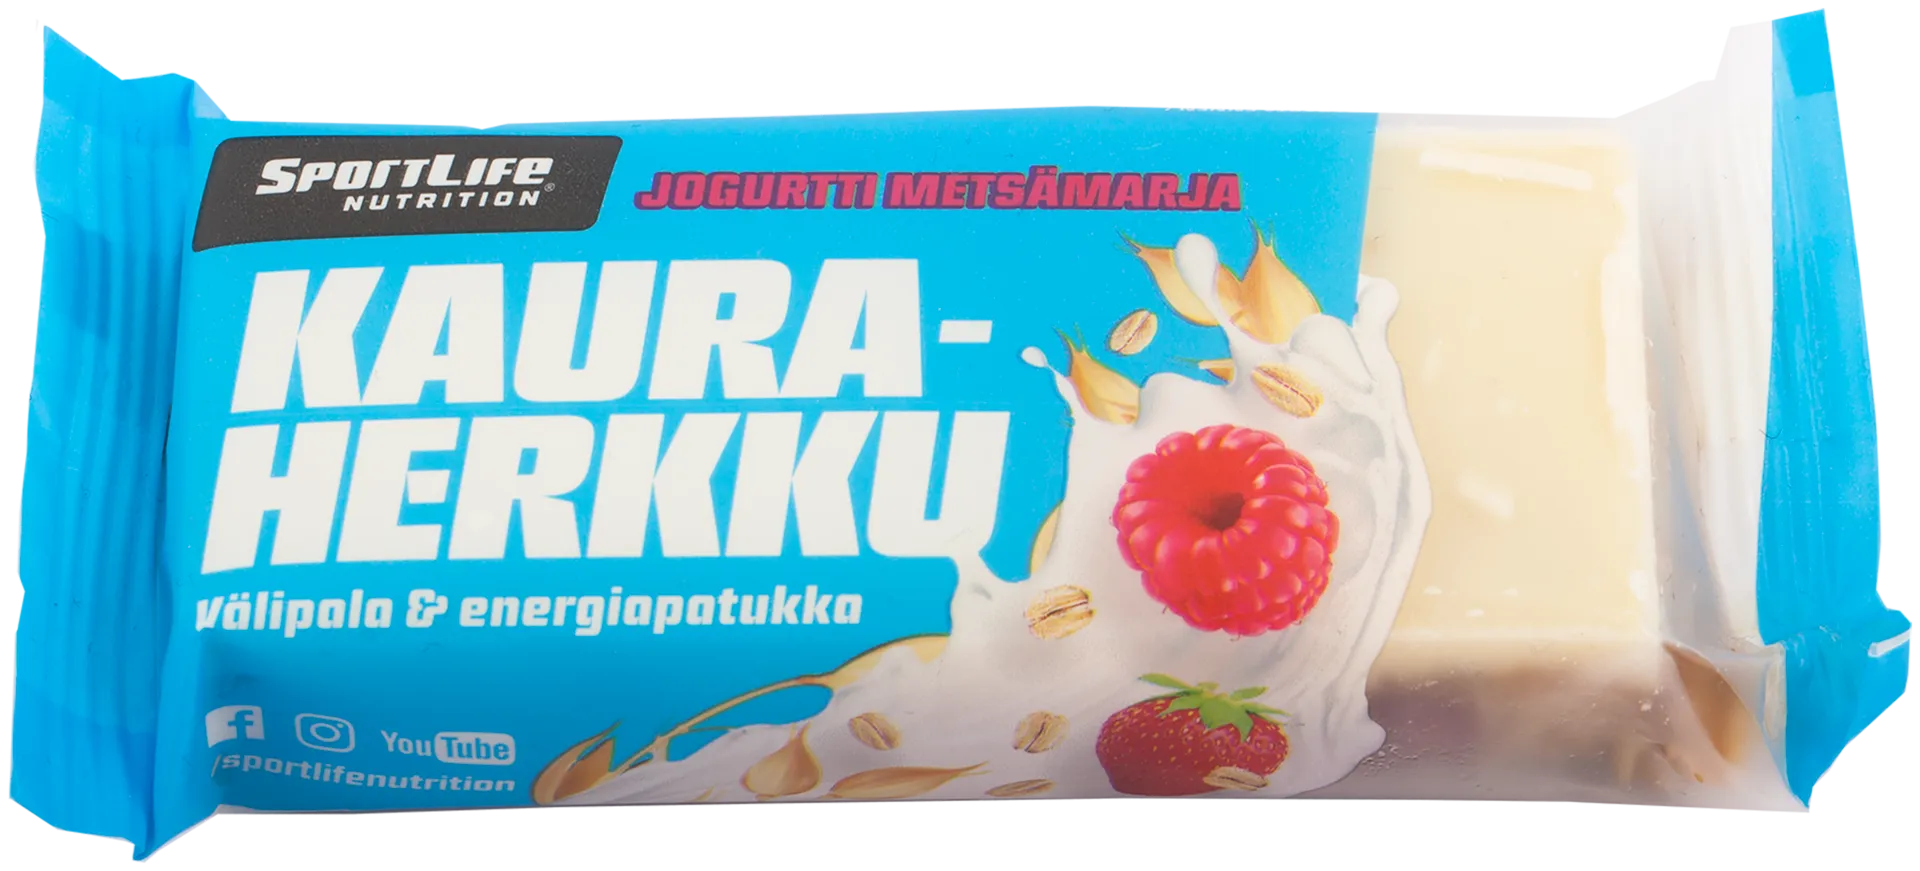 SportLife Nutrition Kauraherkku 70g Jogurtti-metsämarja energiapatukka